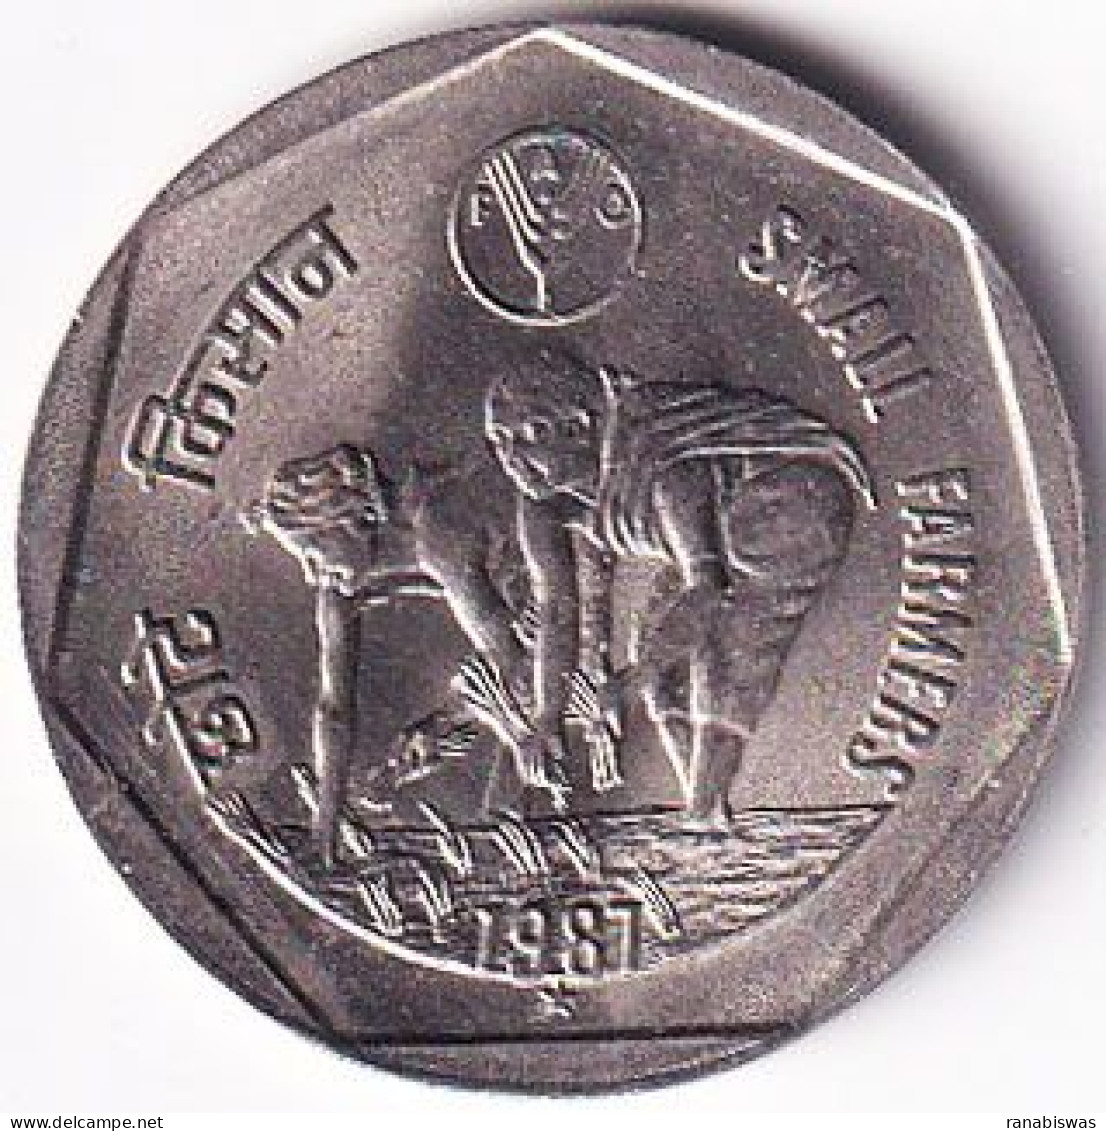 INDIA COIN LOT 32, 1 RUPEE 1987, SMALL FARMERS, FAO, HYDERABAD MINT, UNC, SCARE - India